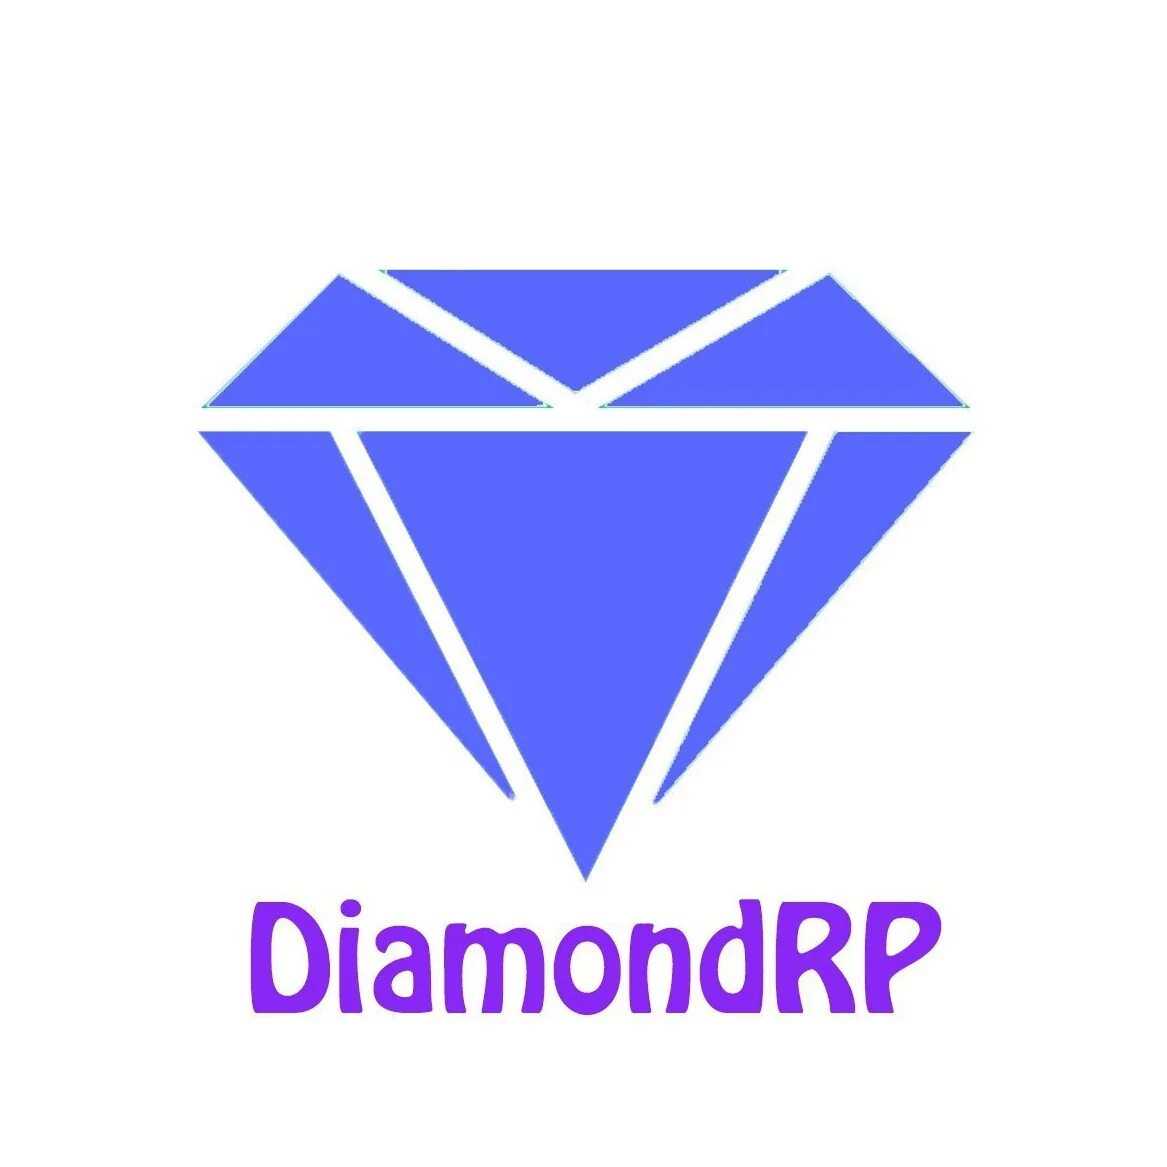 Av diamond. Даймонд РП. Diamond Rp логотип. Даймонд самп. Диамант Diamond Rp.